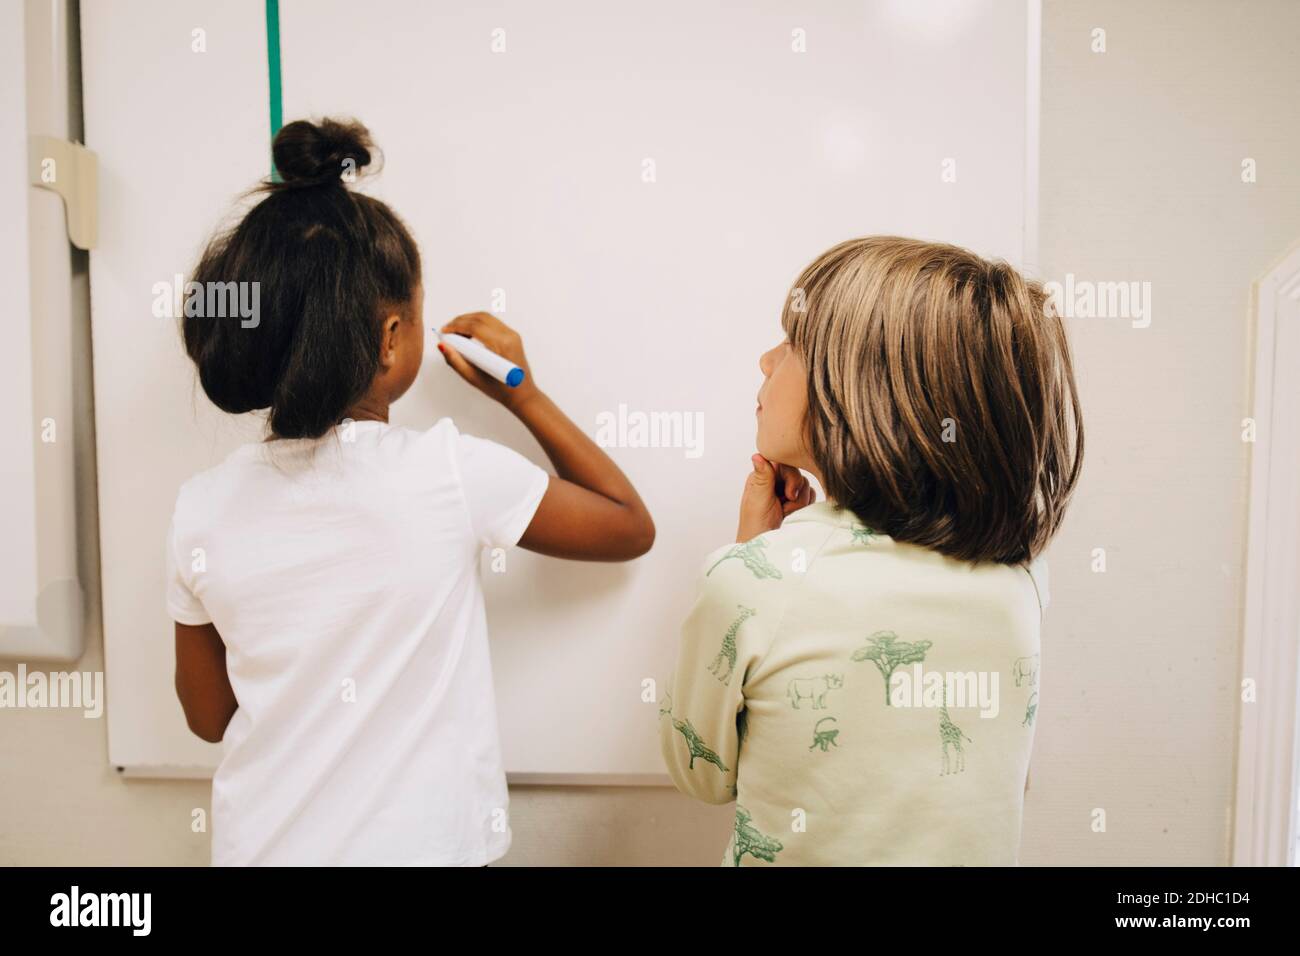 Boy looking at schoolgirl writing on whiteboard in elementary school Stock Photo